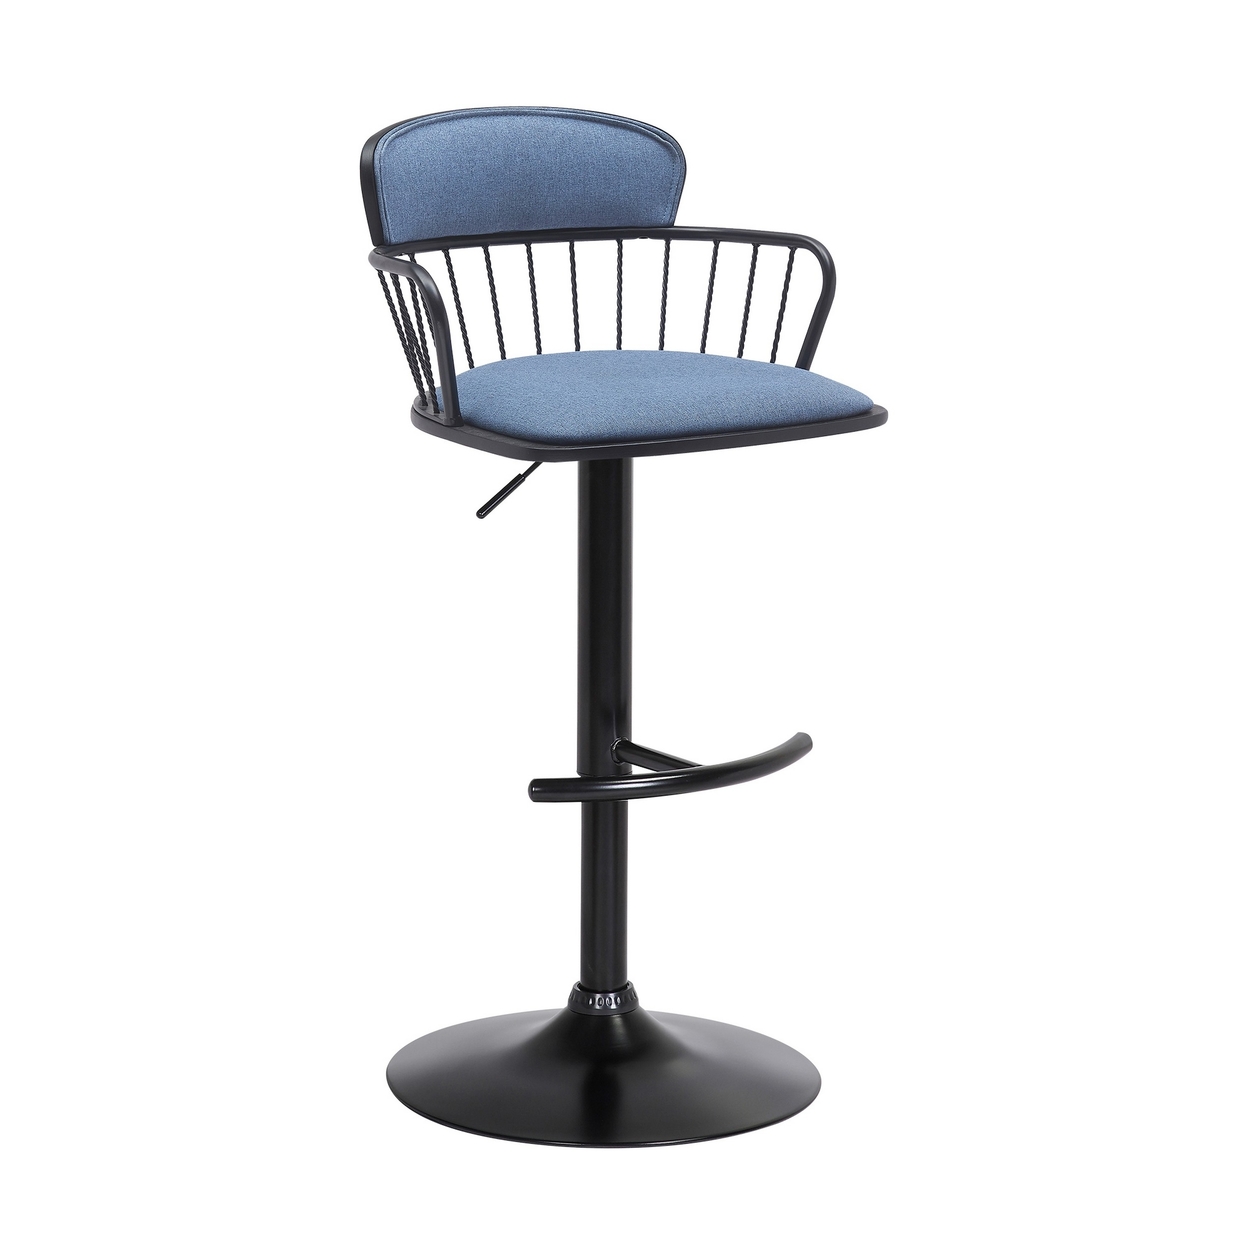 Nish 25-33 Inch Adjustable Barstool Chair, Soft Blue Fabric, Black Frame - Saltoro Sherpi